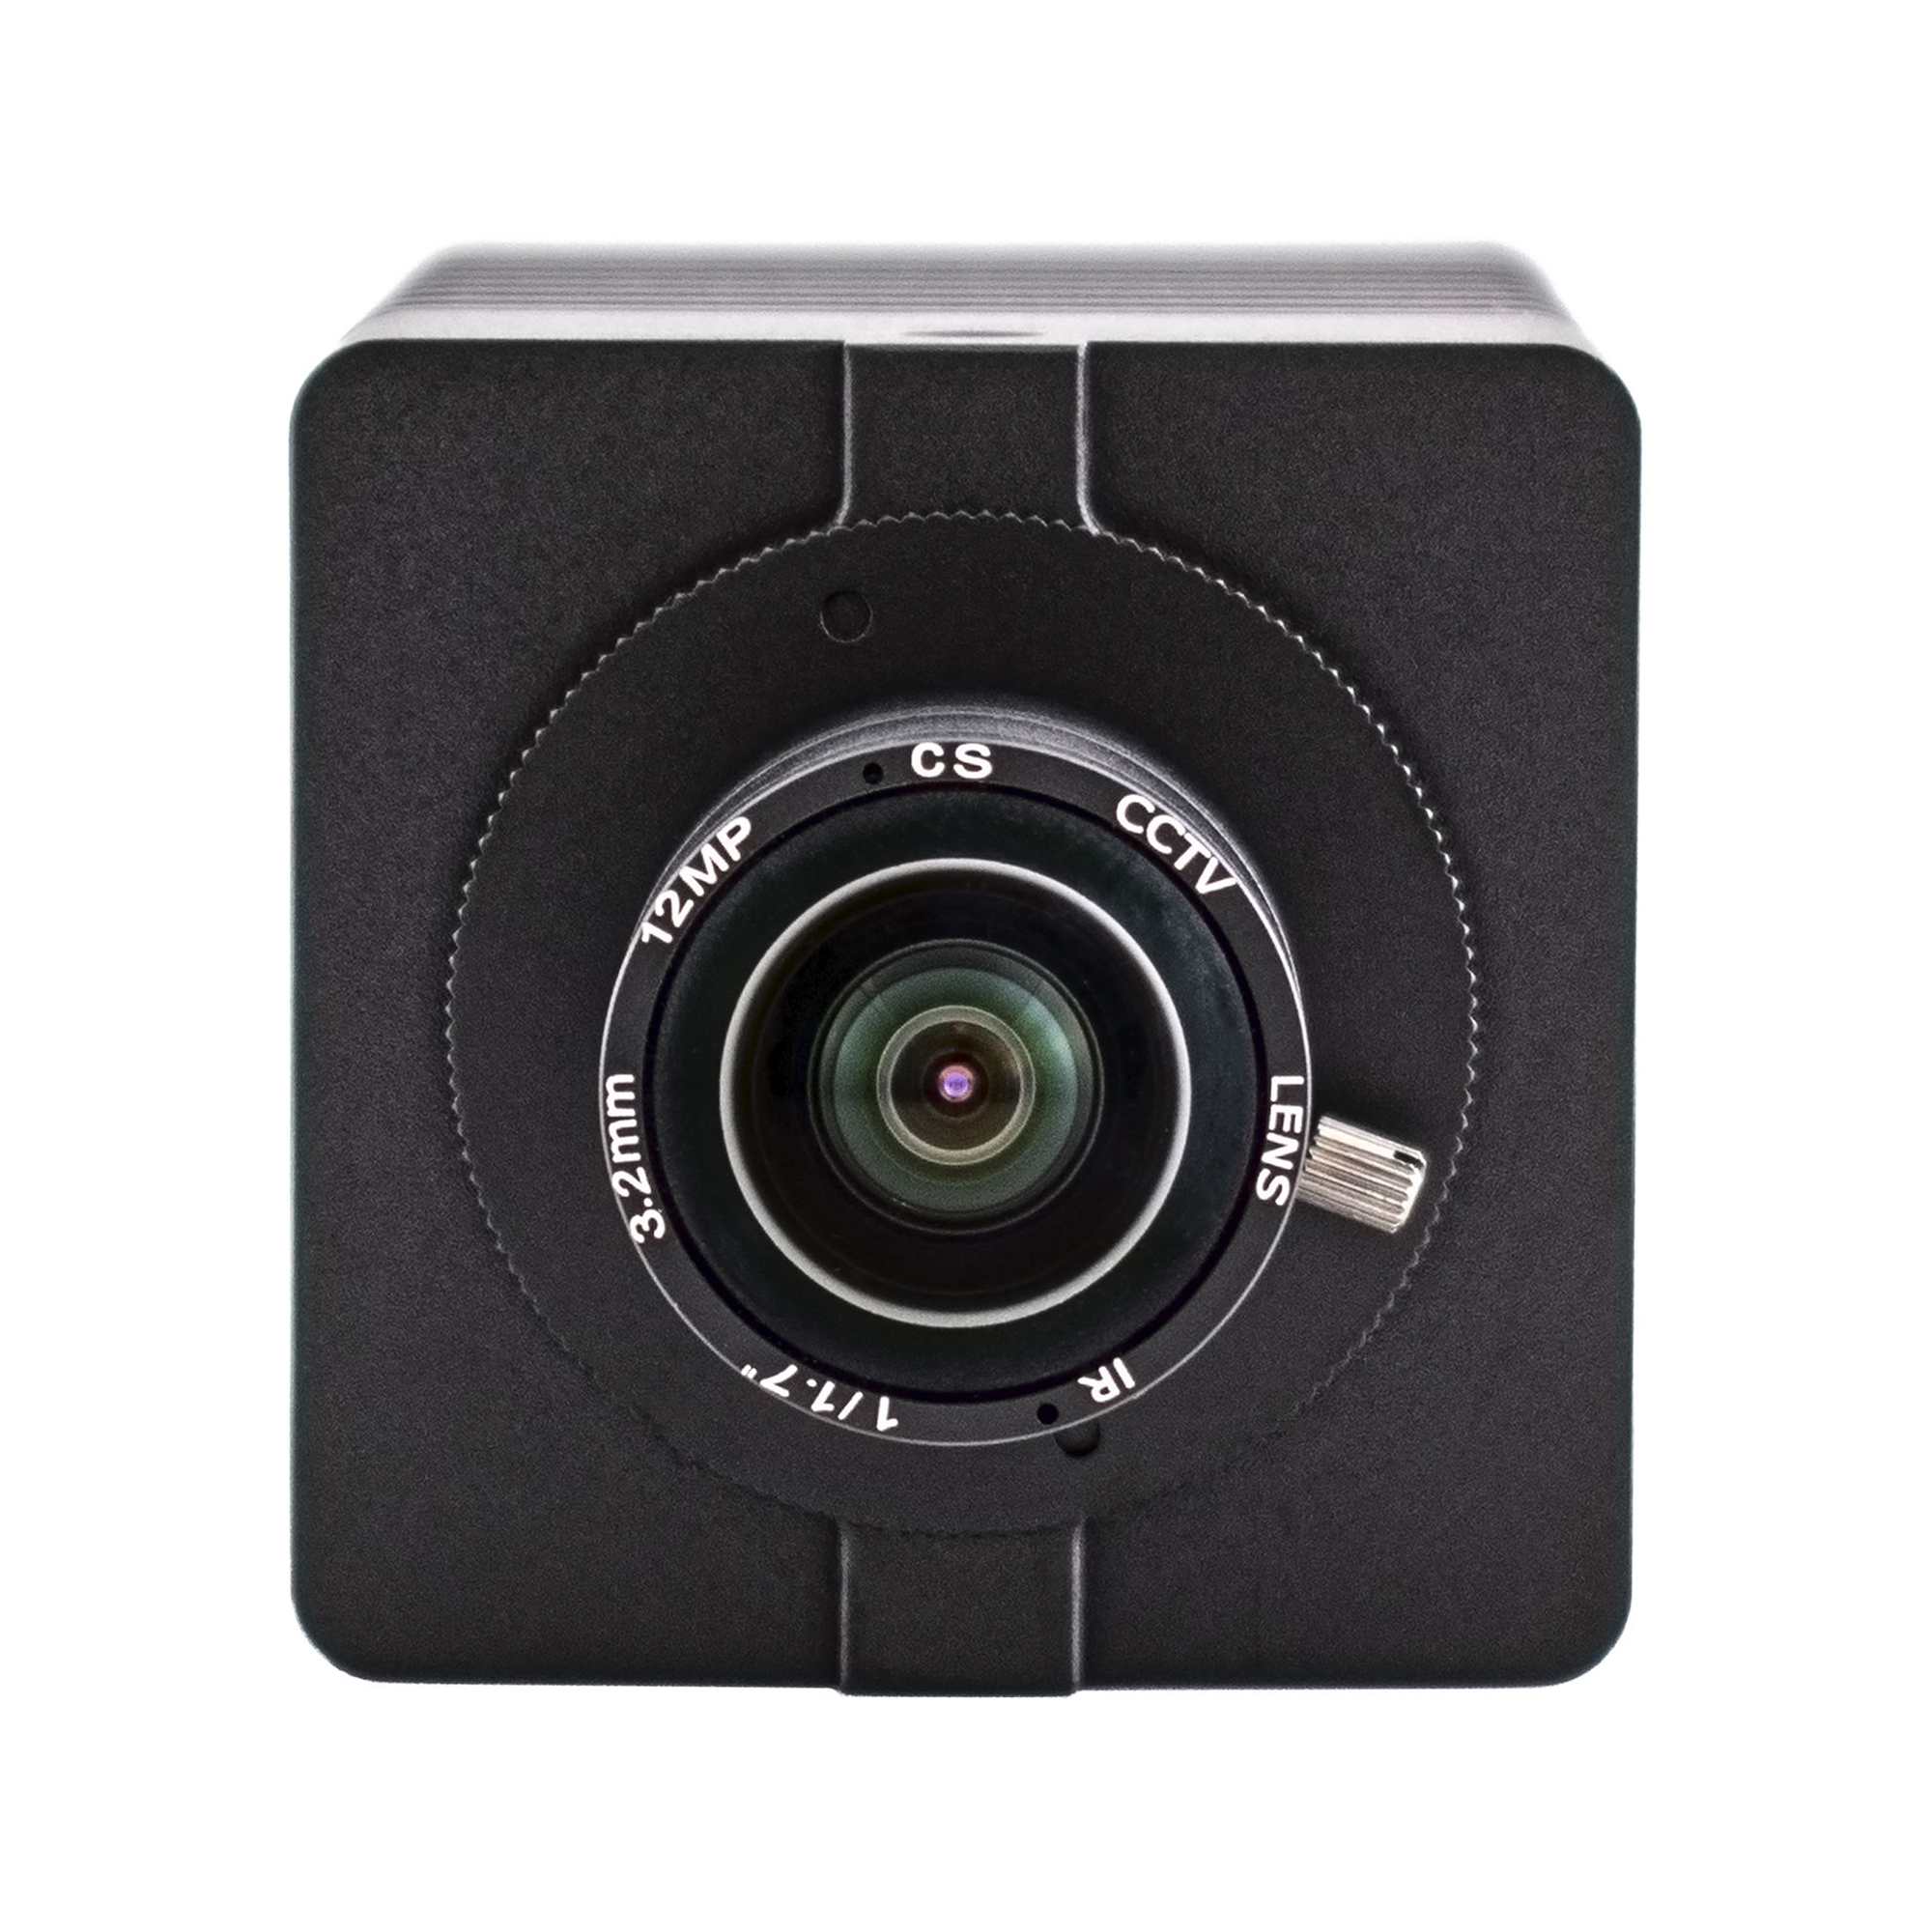 AIDA Imaging UHD-200 4K 60p POV Camera with Varifocal Lens